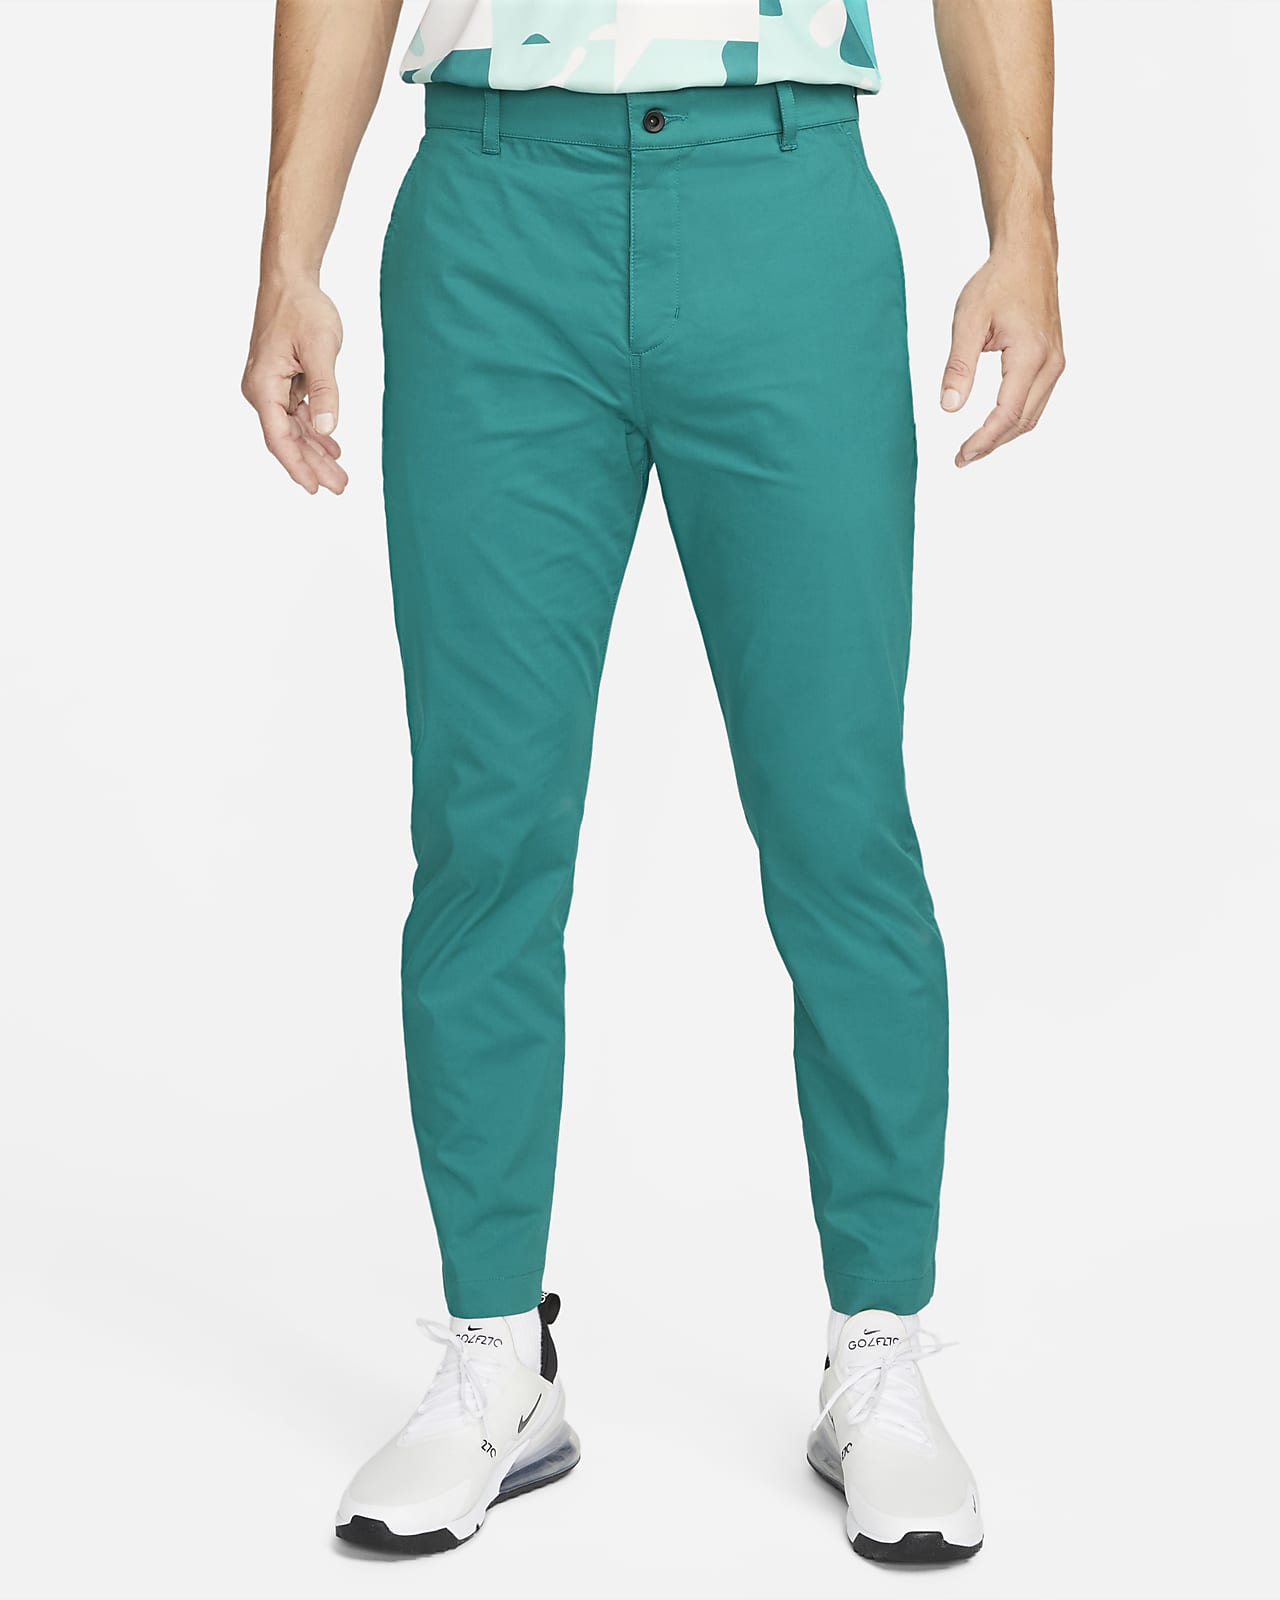 rørledning Allergi genopfyldning Nike Dri-FIT UV-golf-chinobukser med slank pasform til mænd. Nike DK